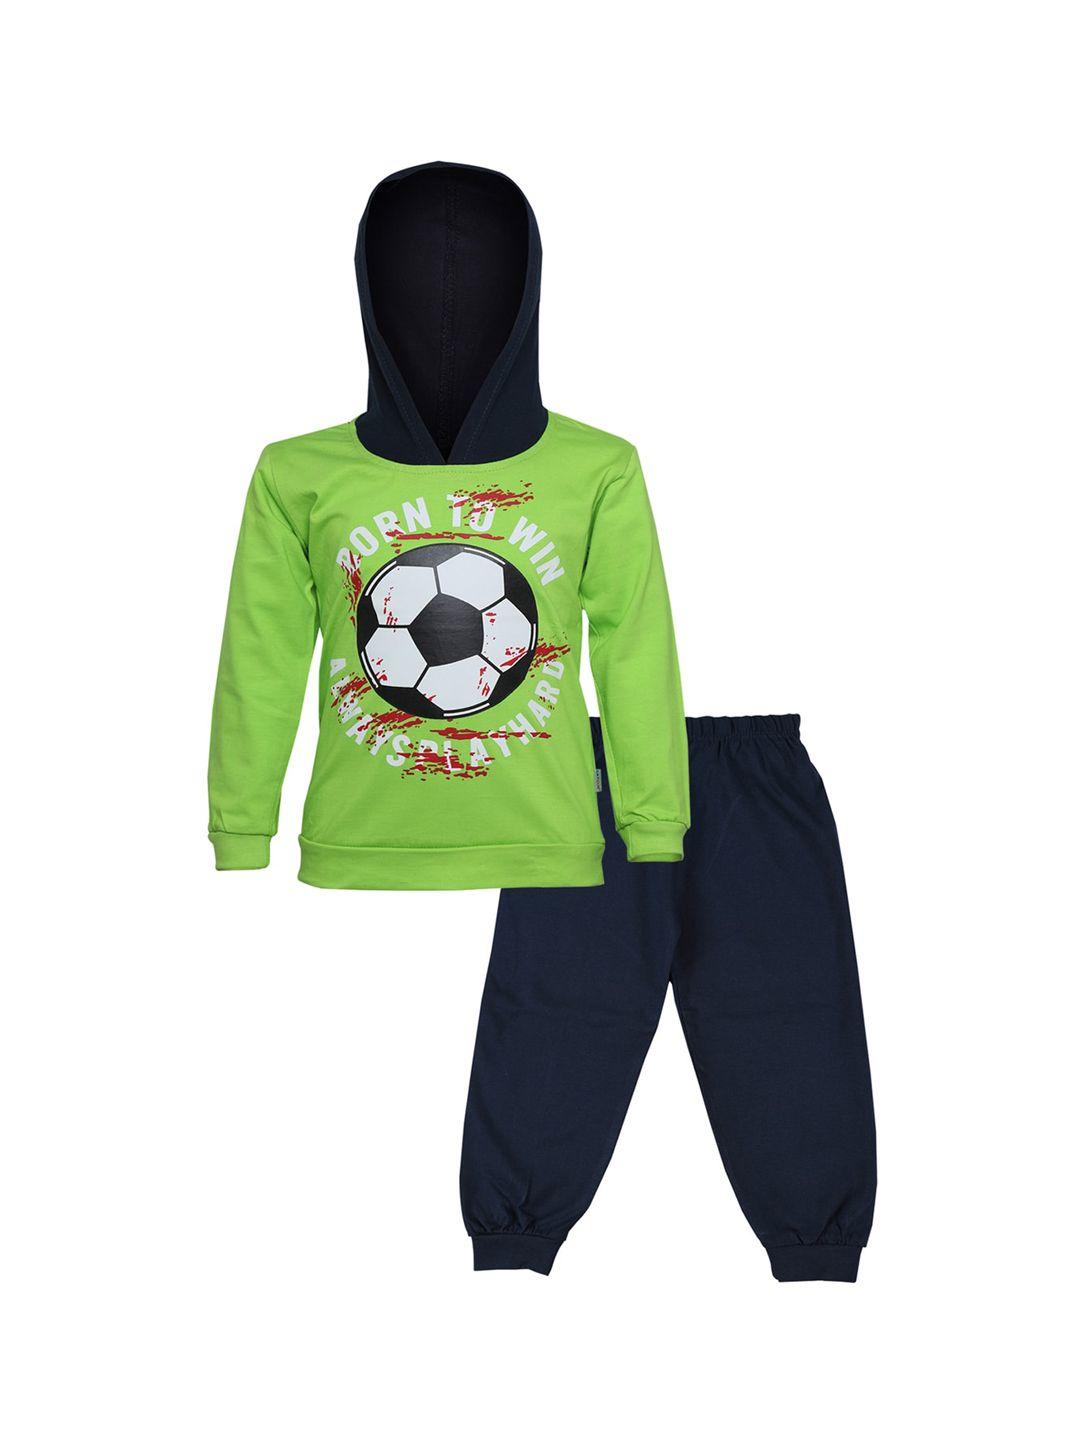 CATCUB Unisex Kids Green Clothing Set